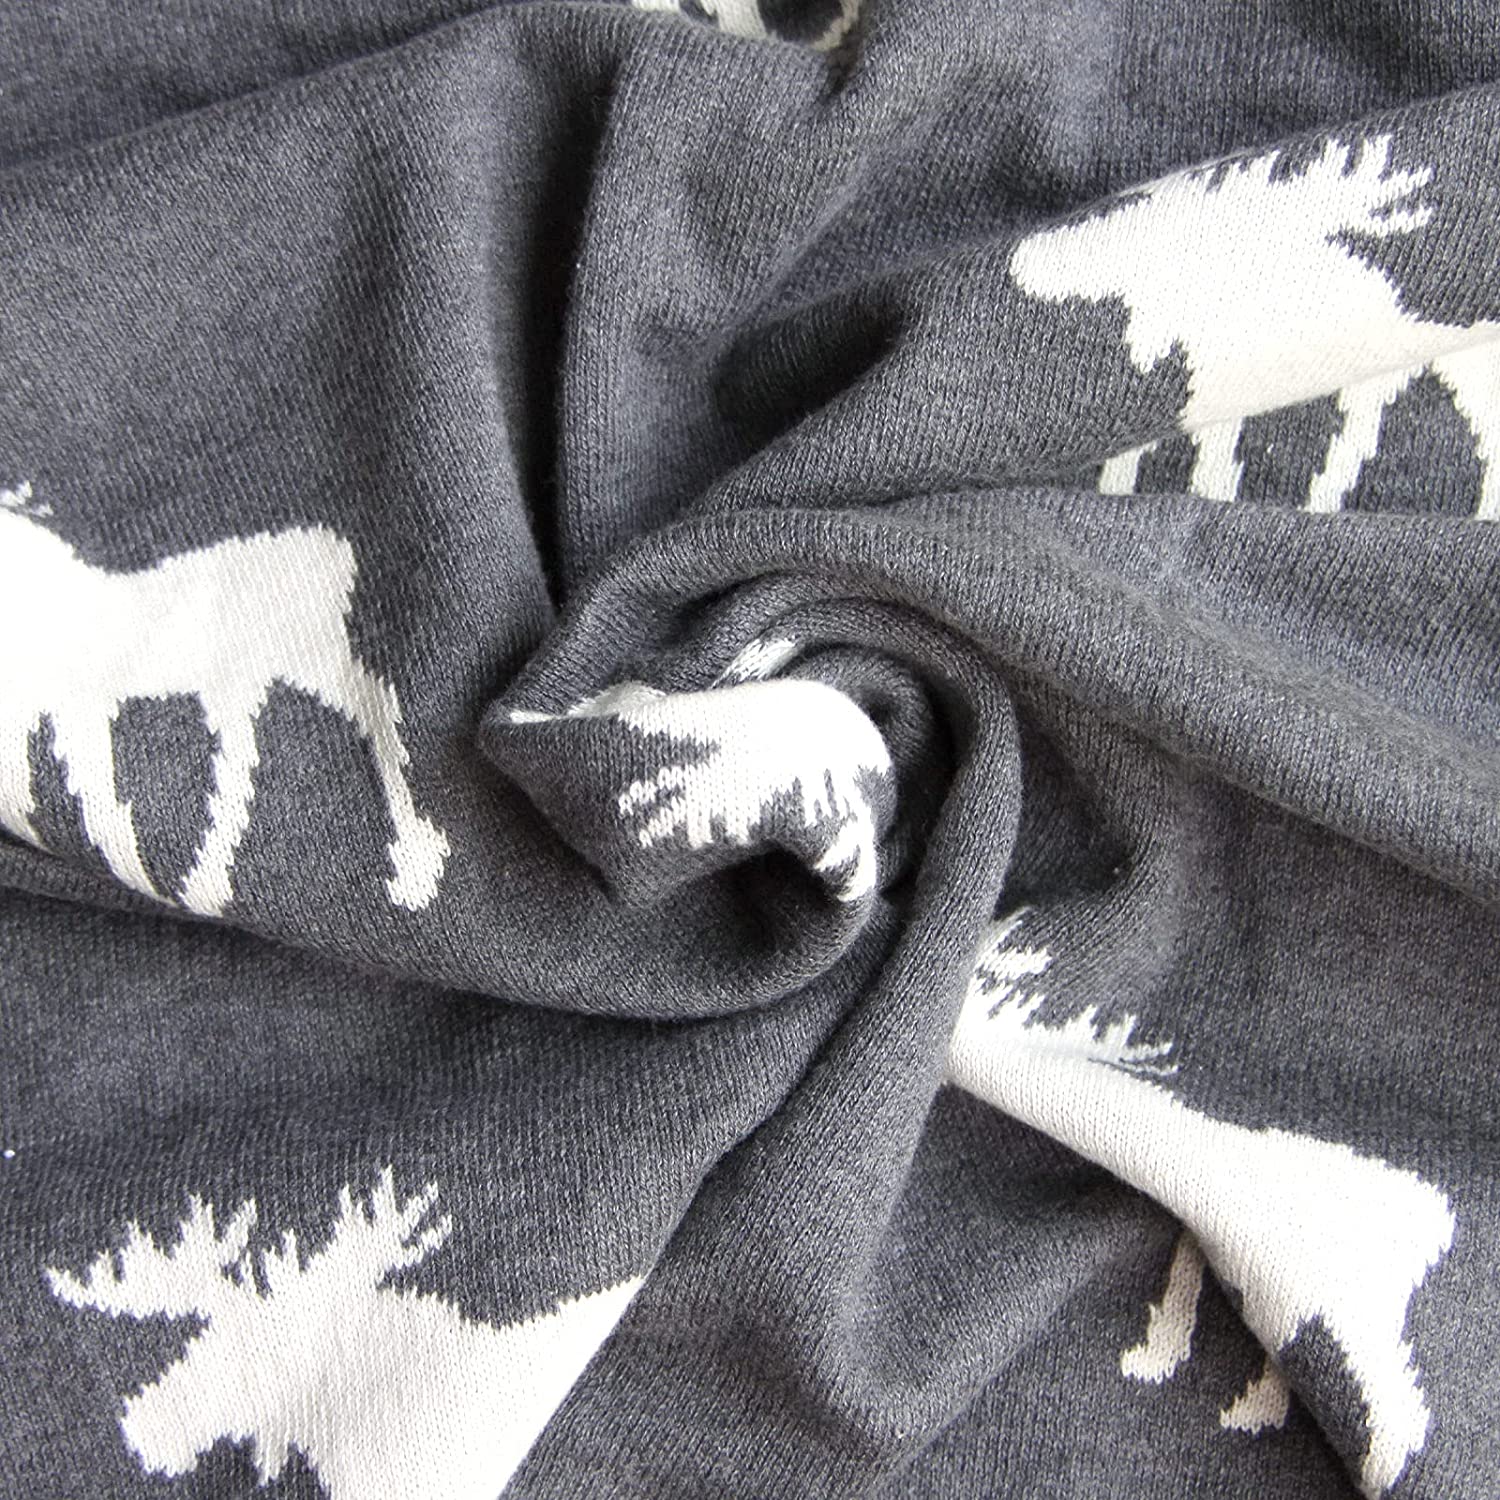 Moose Slub Yarn Grey and Cream Blanket - Large